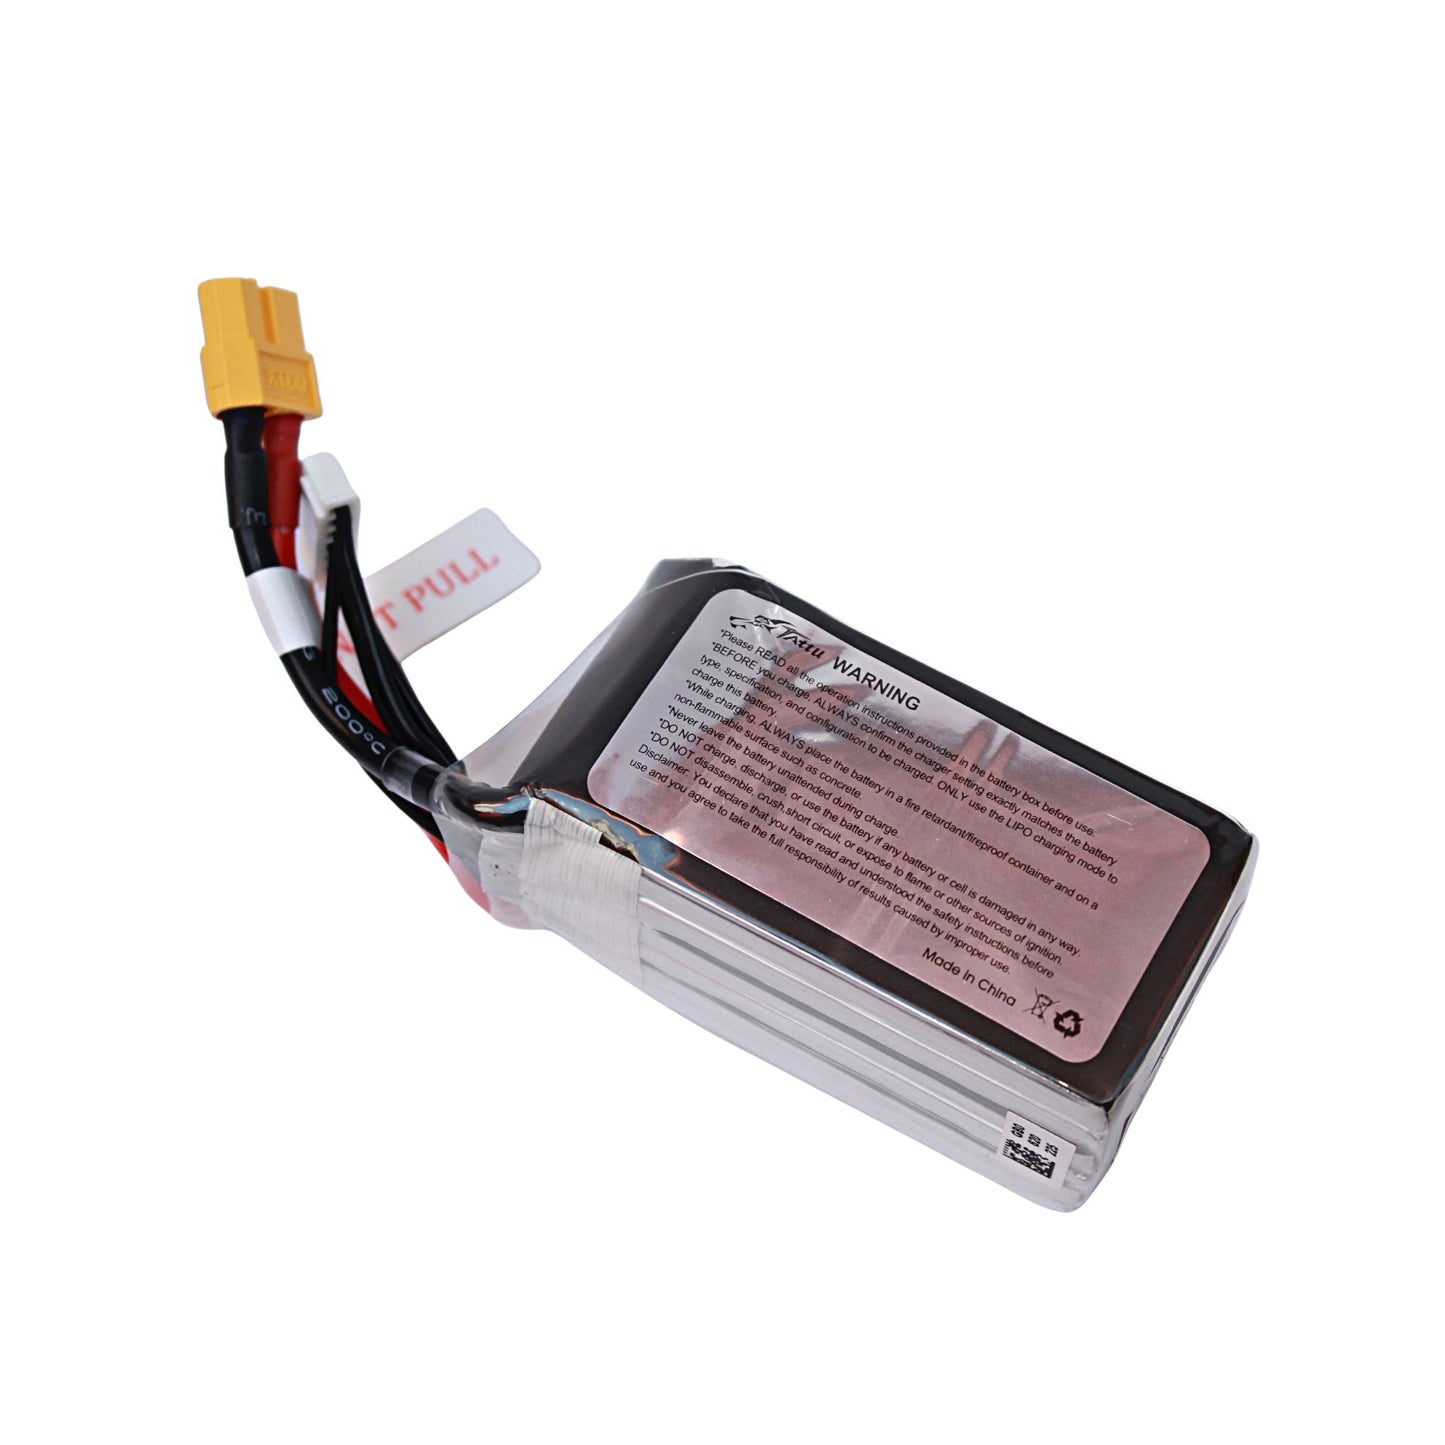 Batería Lipo TATTU R-LINE 1400 mah 22.2V 6S 150C conector XT60